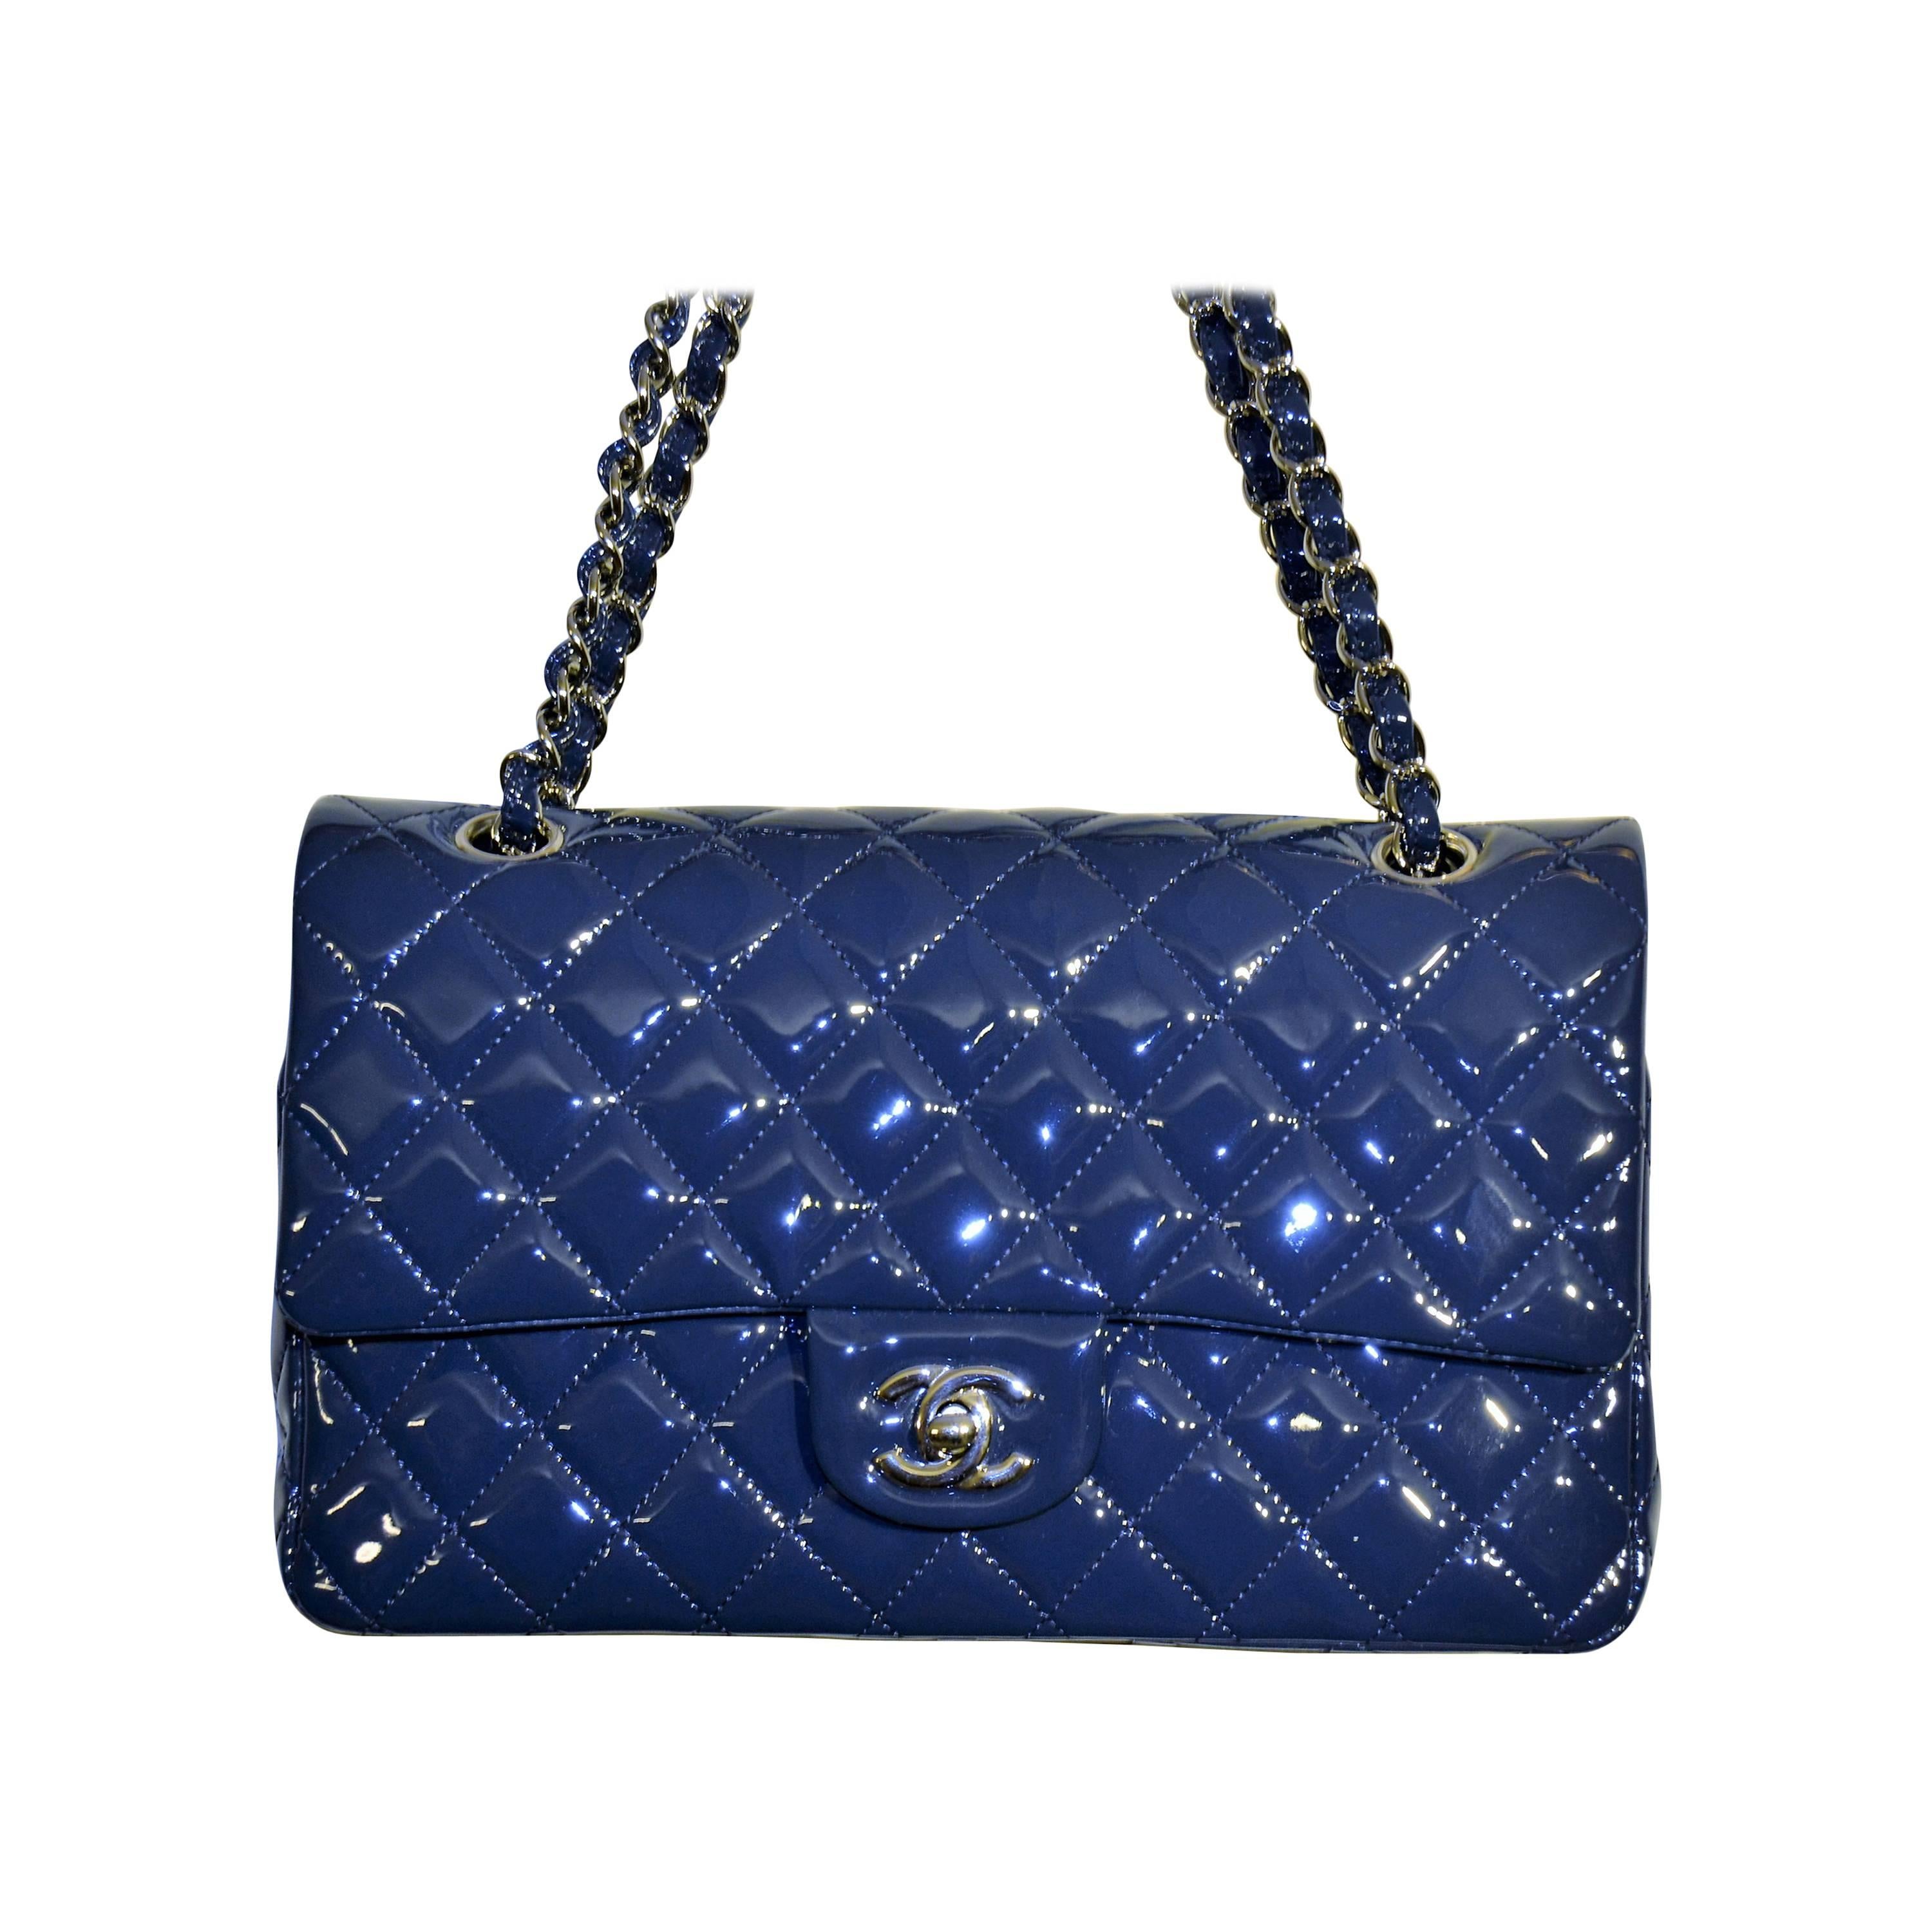 2000s Chanel blu vernish bag